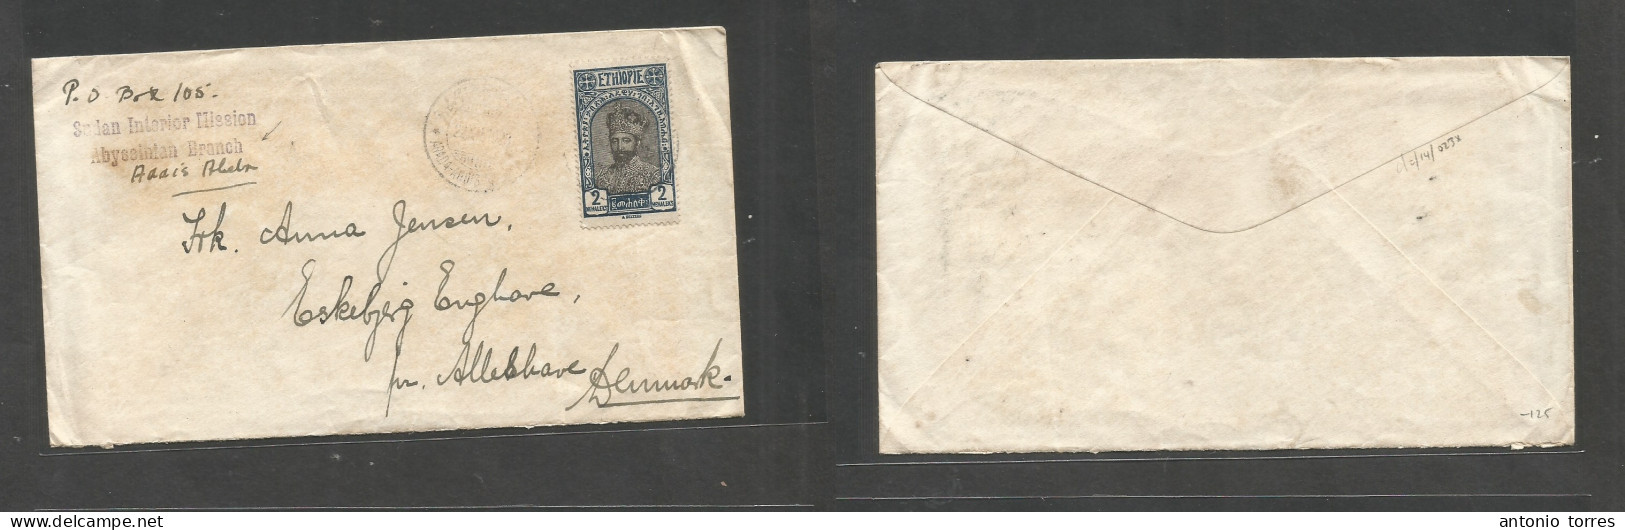 Ethiopia. 1928 (22 Dec) Sudan Mission. Abissinian Branch. Abada, Addis Abeba - Denmark, Eskebjeg. 2m Single Fkd Envelope - Ethiopia